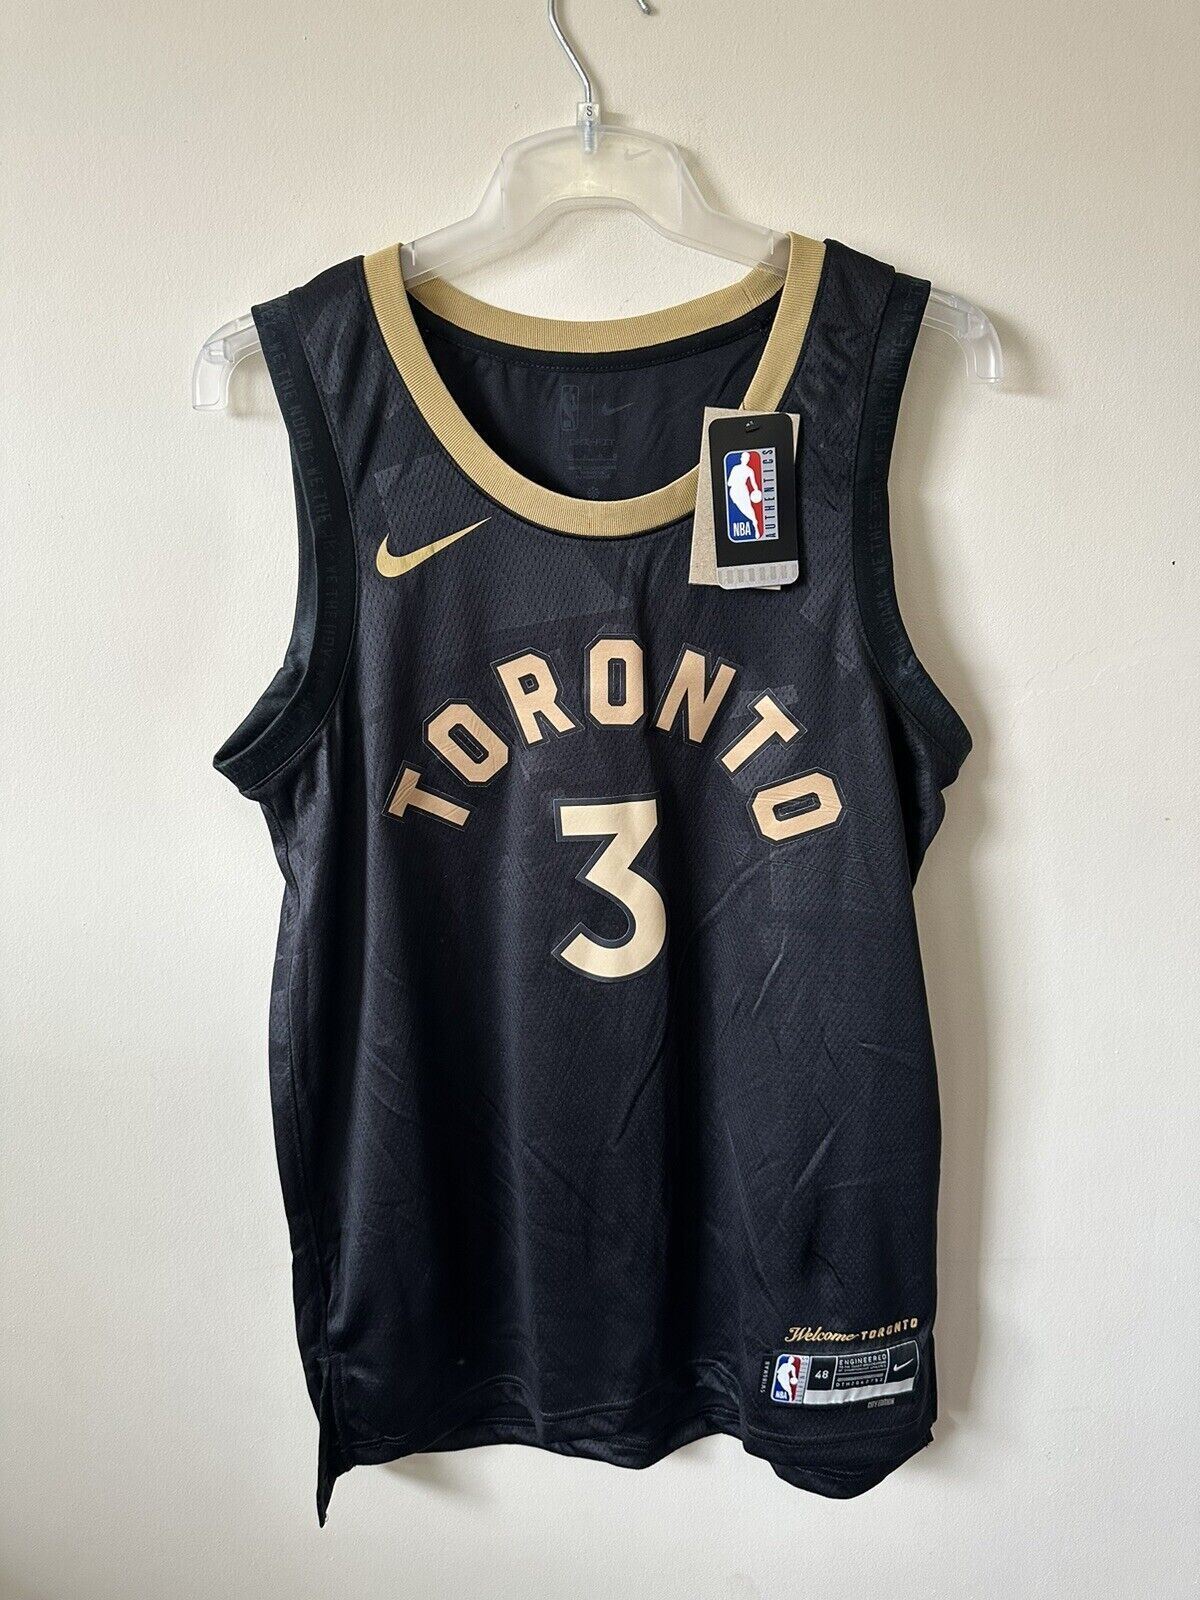 Nike NBA Toronto Raptors City Edition Jersey ANUNBOY 3 Basketball Mens Large